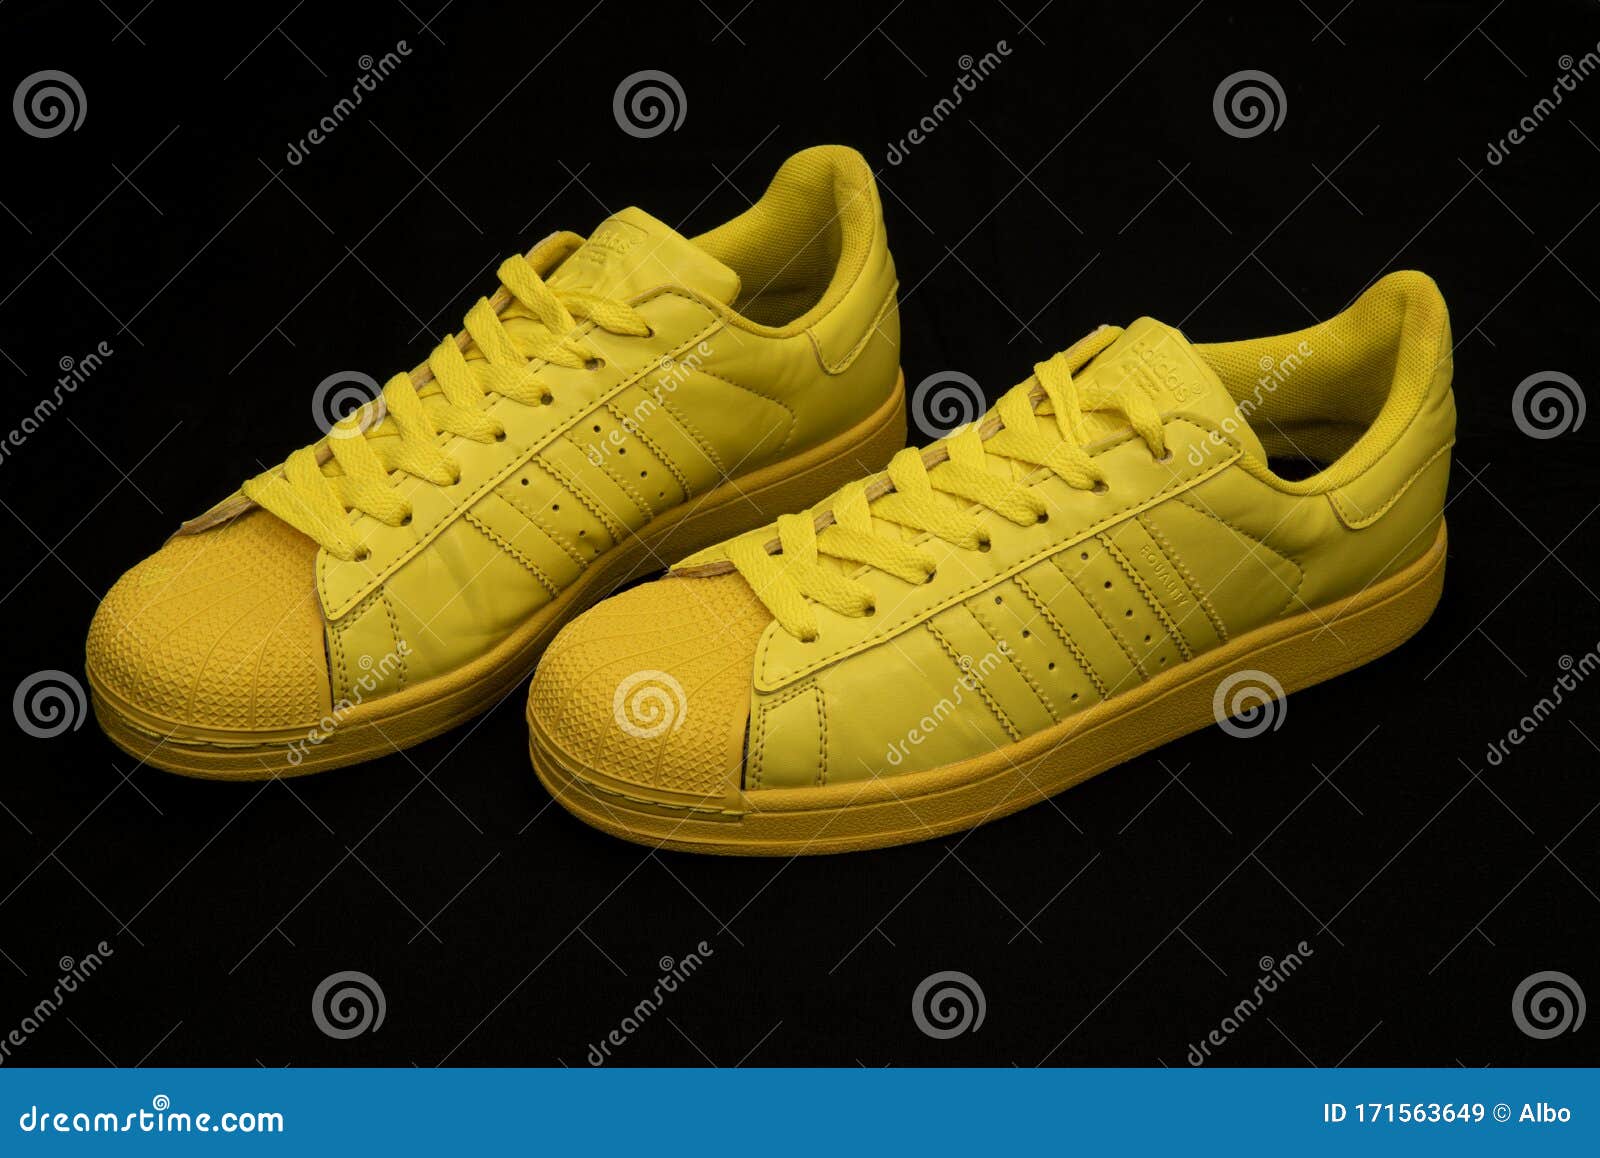 Adidas Superstar Pharrell Williams Yellow Editorial Image - Image of fitness, adidas: 171563649